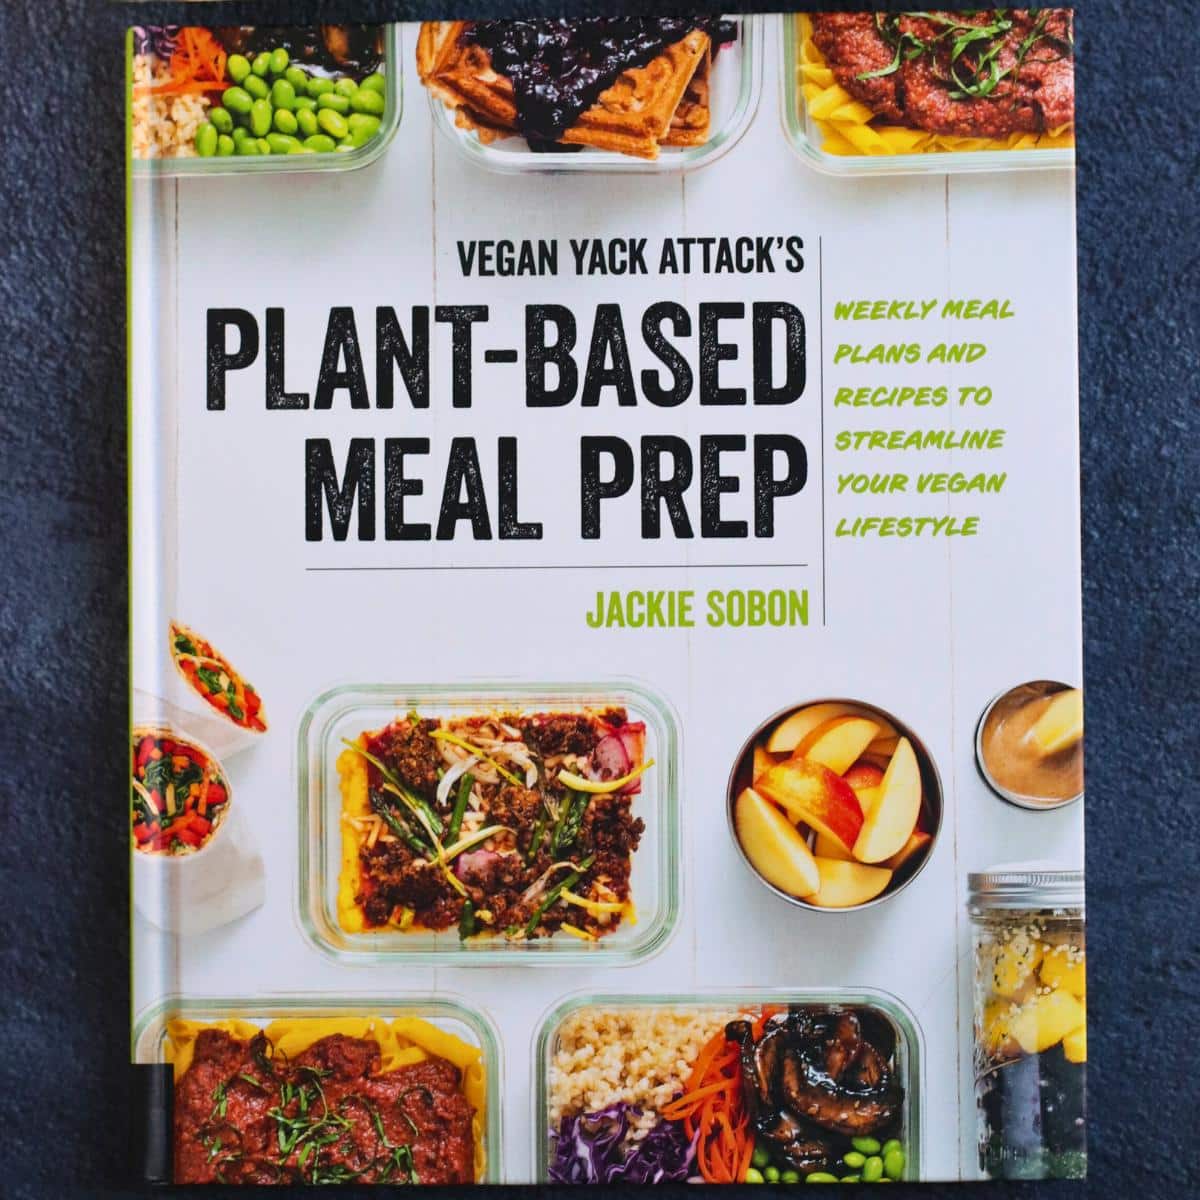 Vegan Yack Attack's Plant-Based Meal Prep cookbook.